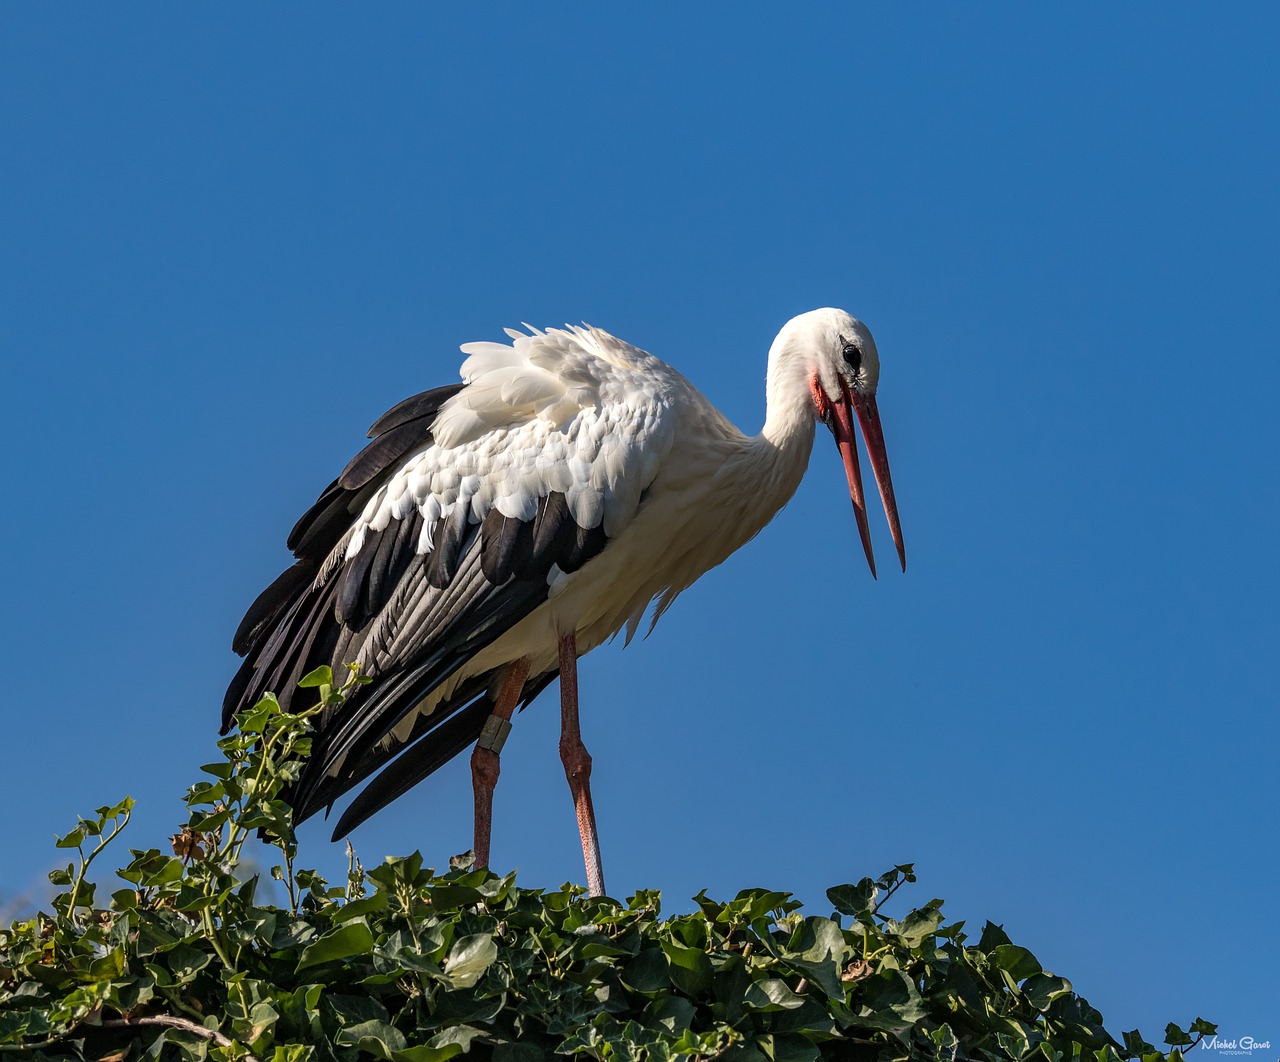 Image - nature stork birds nest alsace